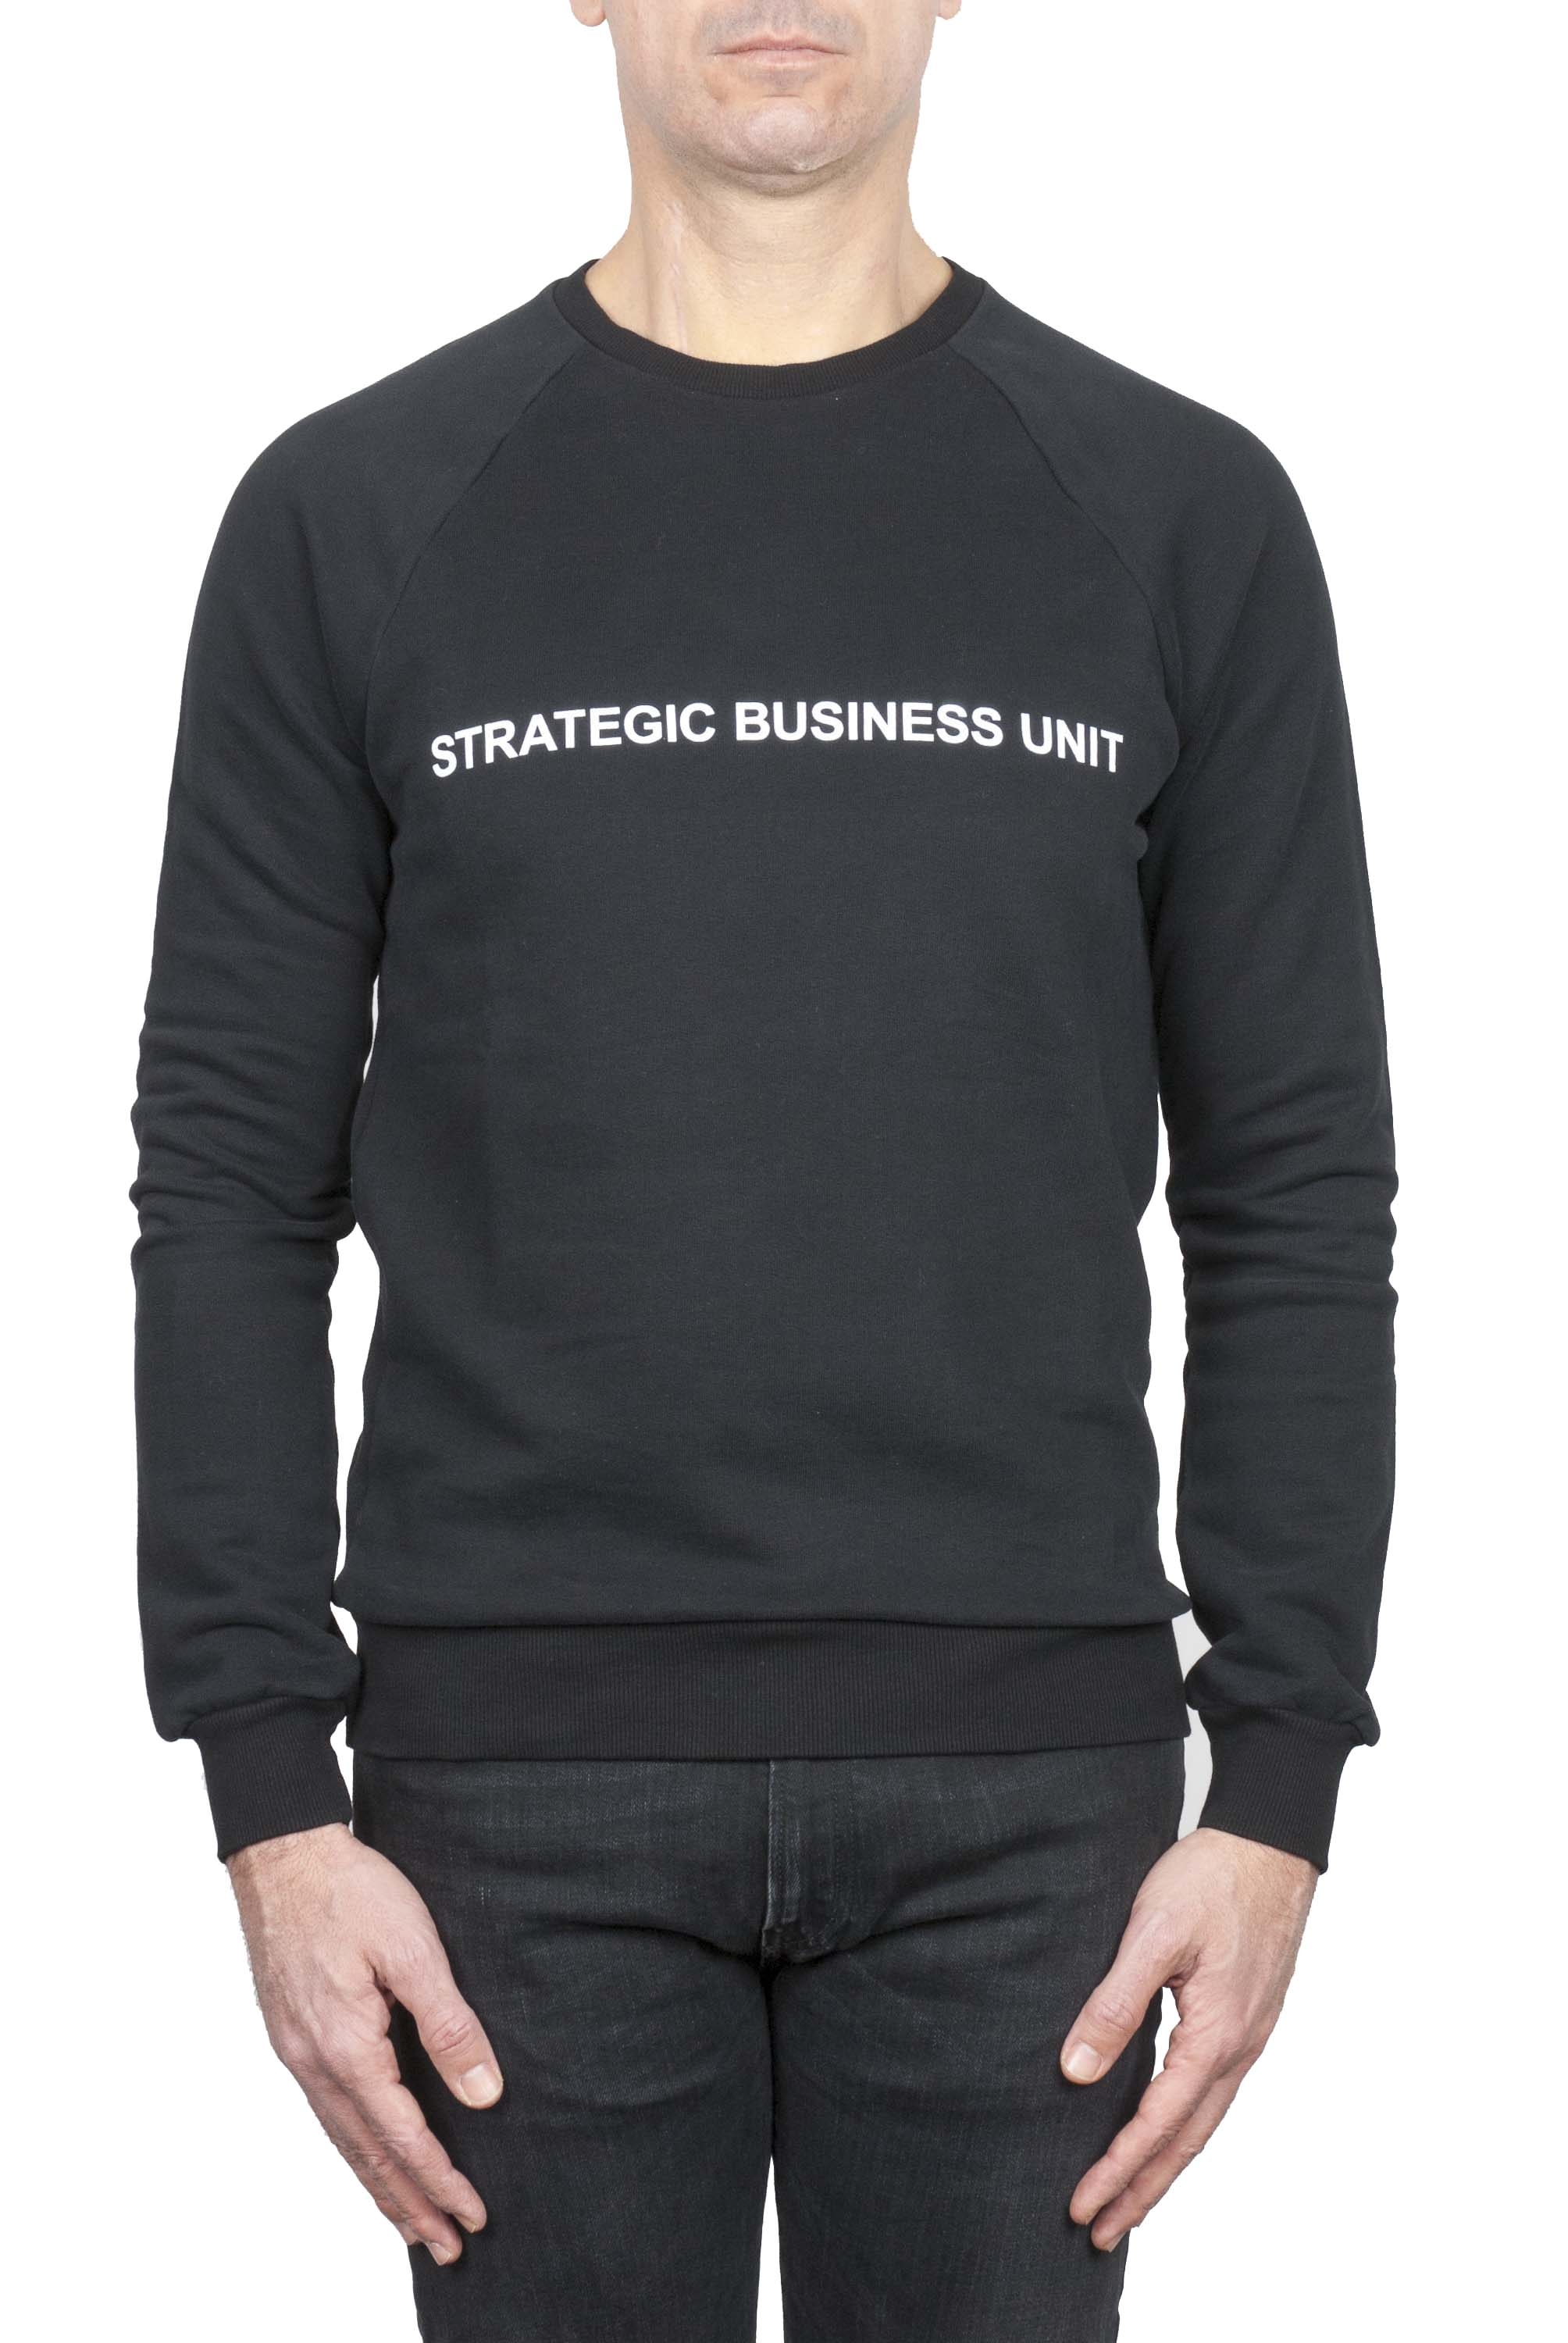 SBU 01467 Strategic Business Unit logo printed crewneck sweatshirt 01